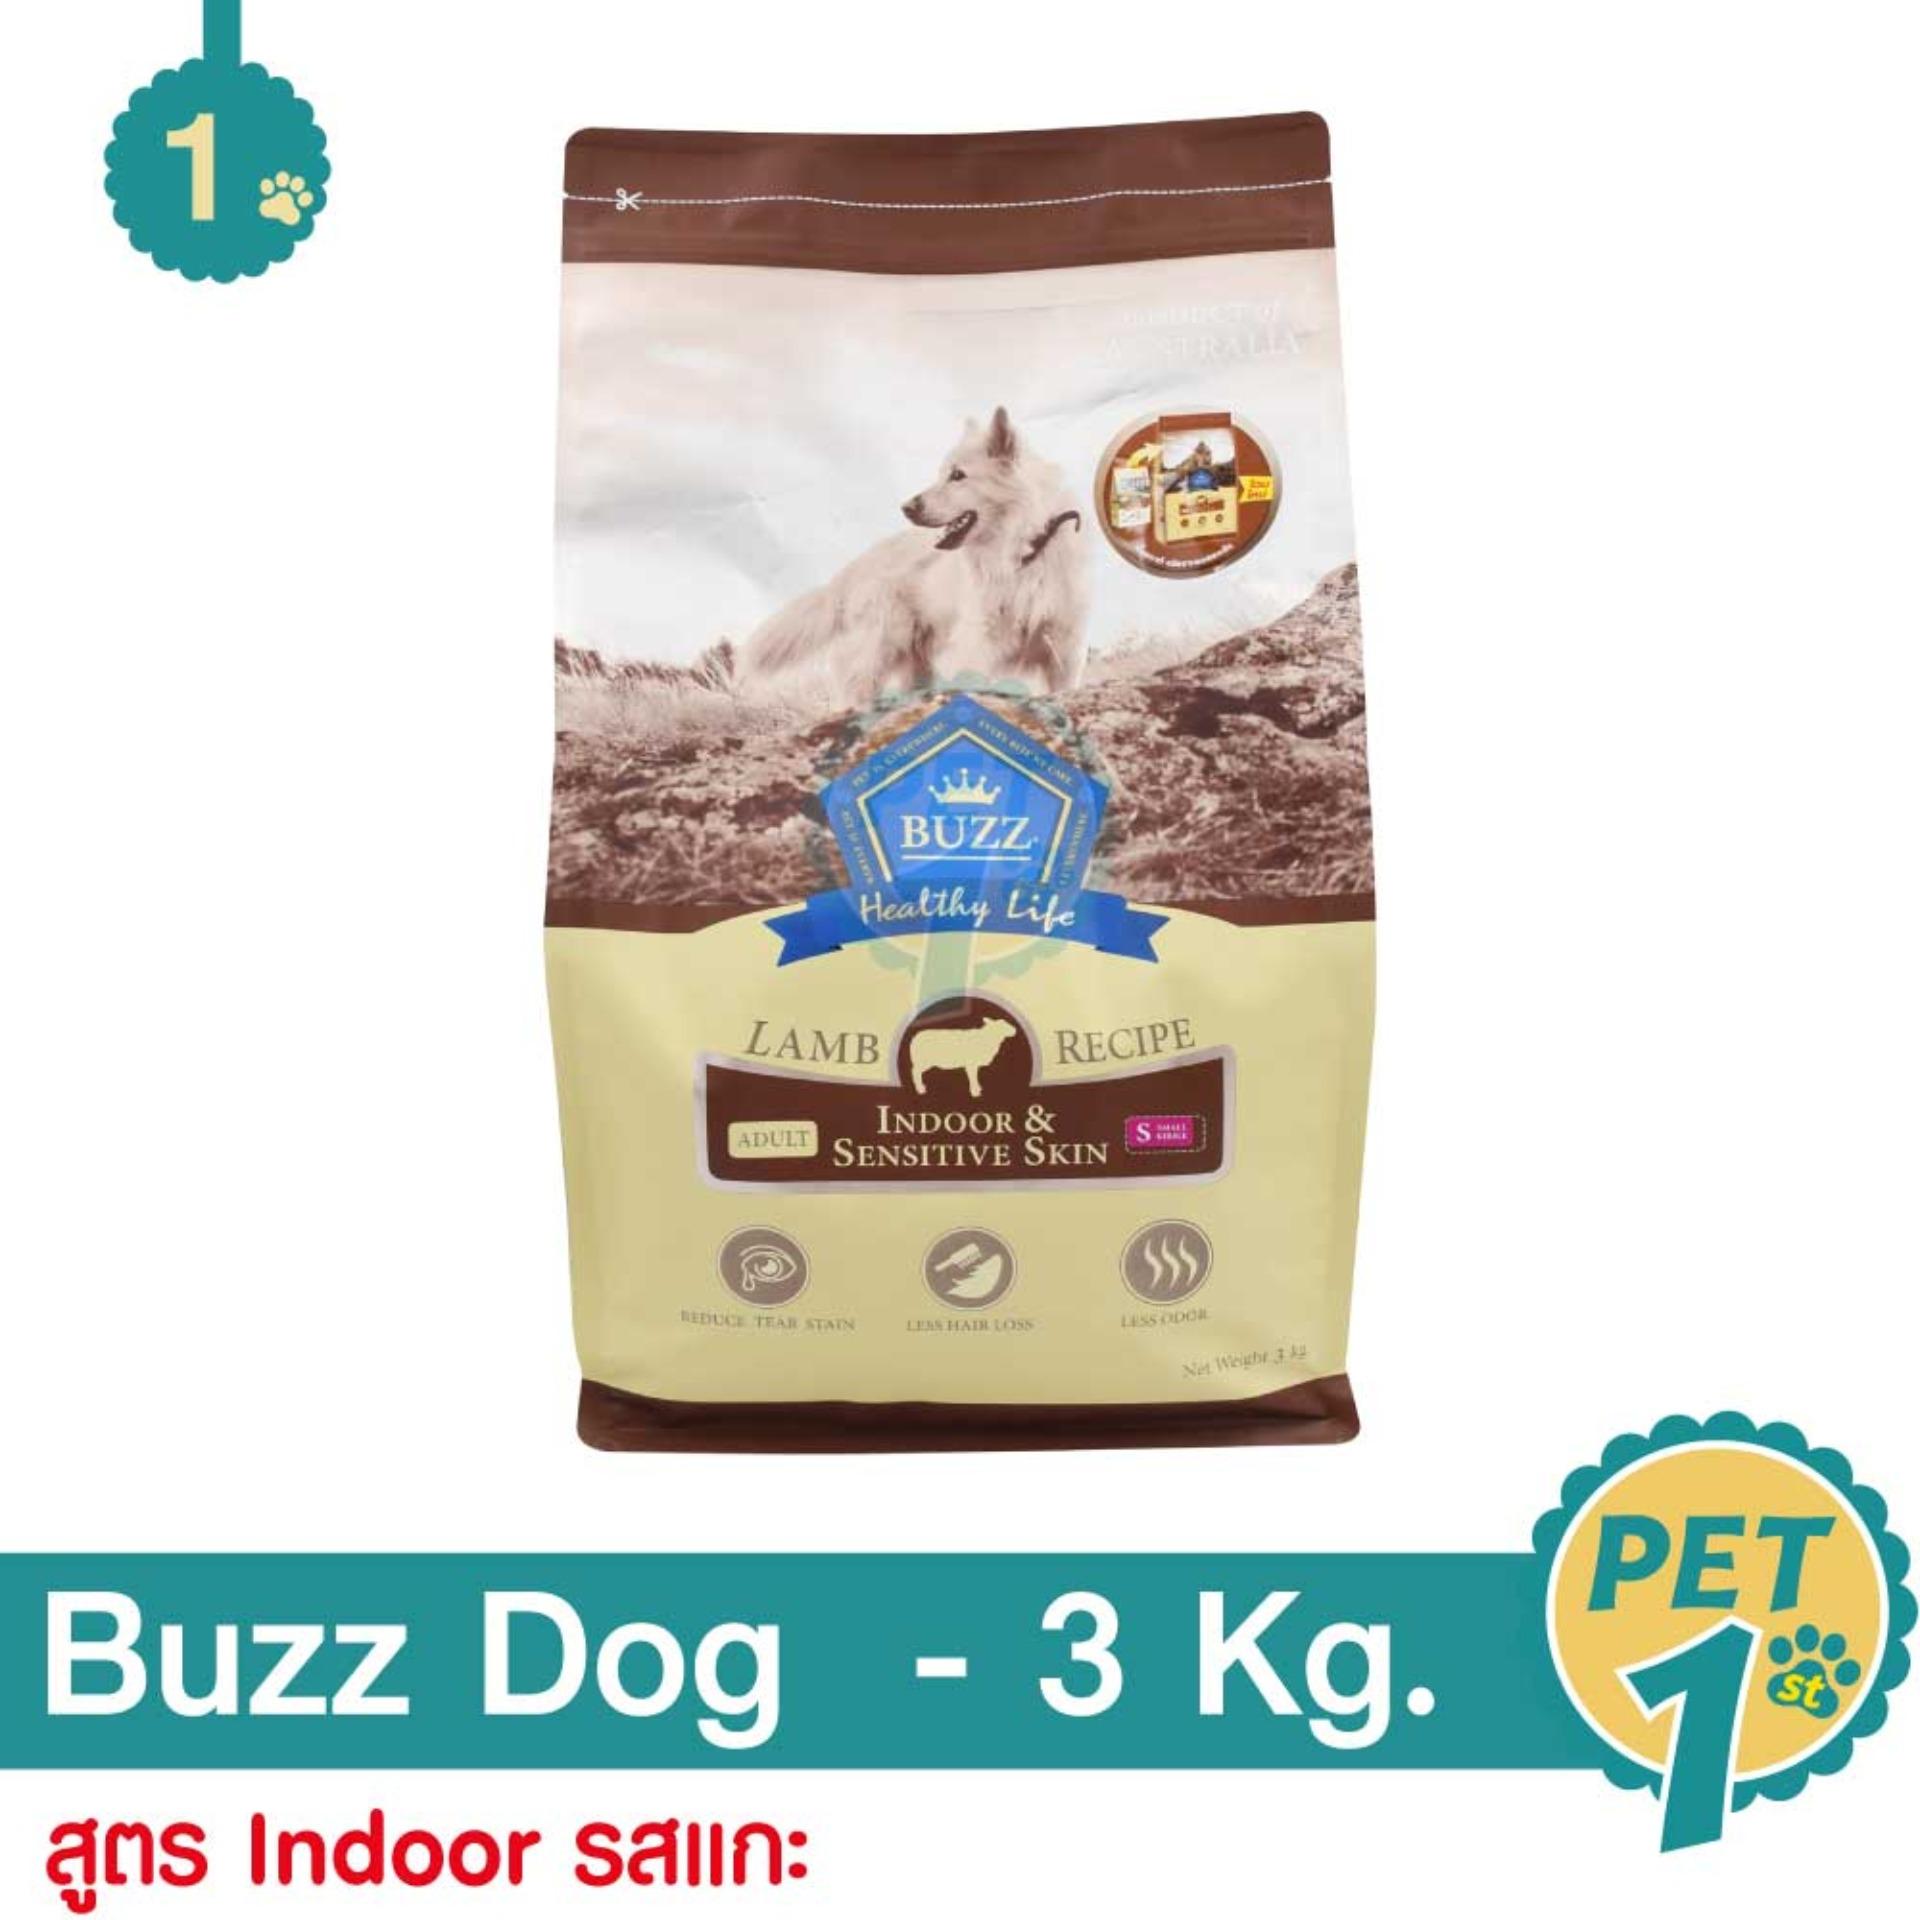 Buzz Indoor & Sensitive Skin Lamb 3 Kg. อาหารสุนัข รสแกะ (เม็ดเล็ก) สำหรับสุนัขโต ขนาด 3 กิโลกรัม